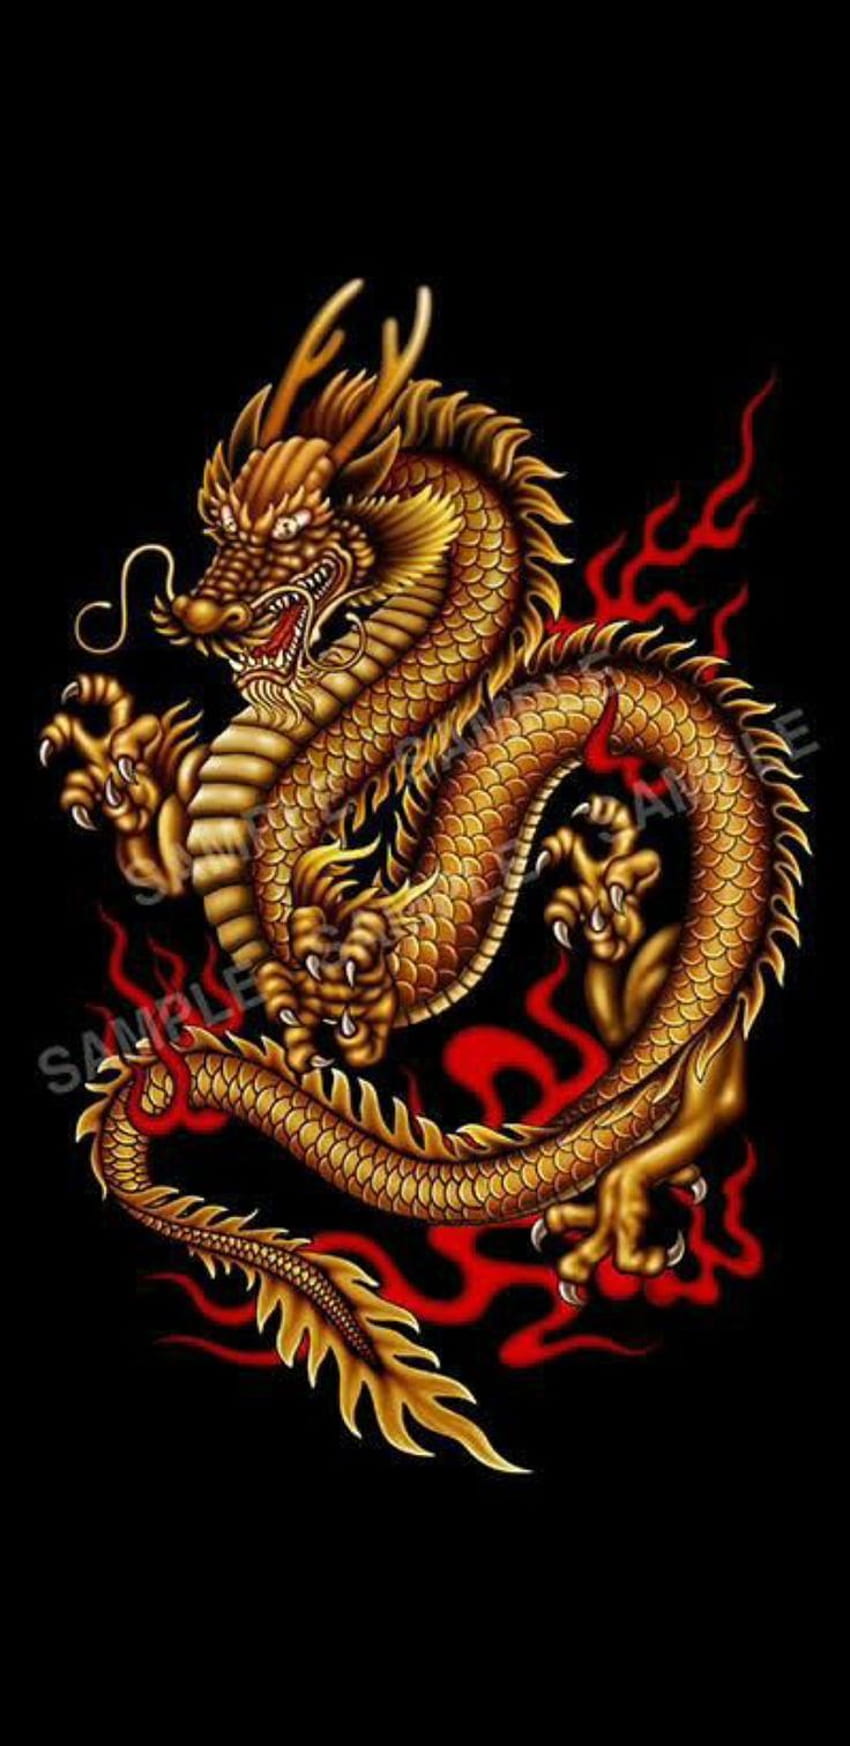 Cindy Sowers on Dragons in 2021. Chinese dragon art, Dragon artwork, Dragon artwork fantasy, Golden Chinese Dragon HD電話の壁紙